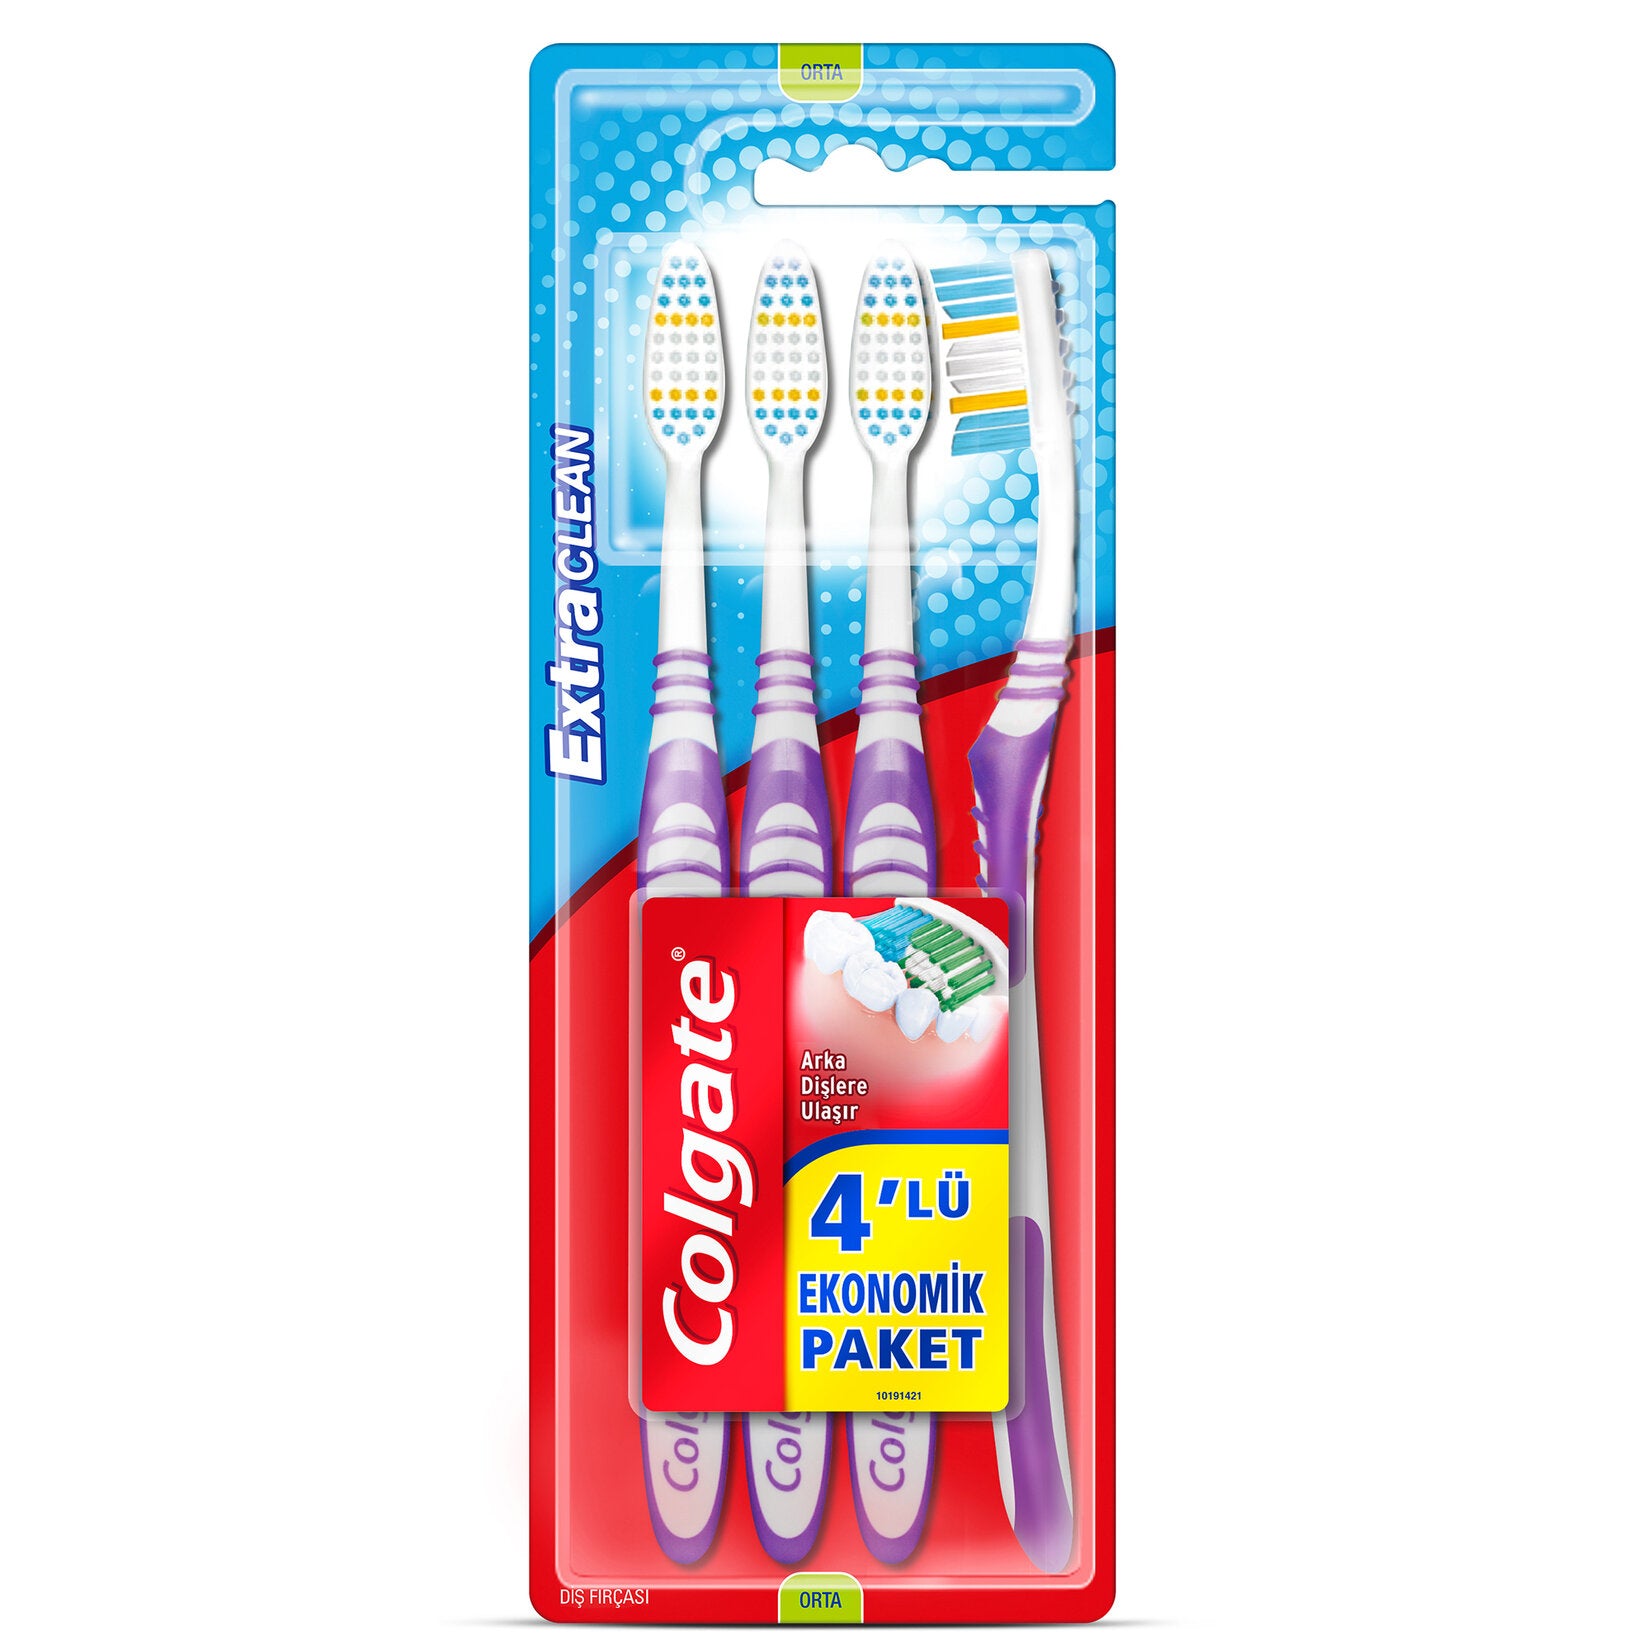 Colgate Extra Clean Medium Toothbrush 4-Pack (Orta Di? F?r?as? 3+1)